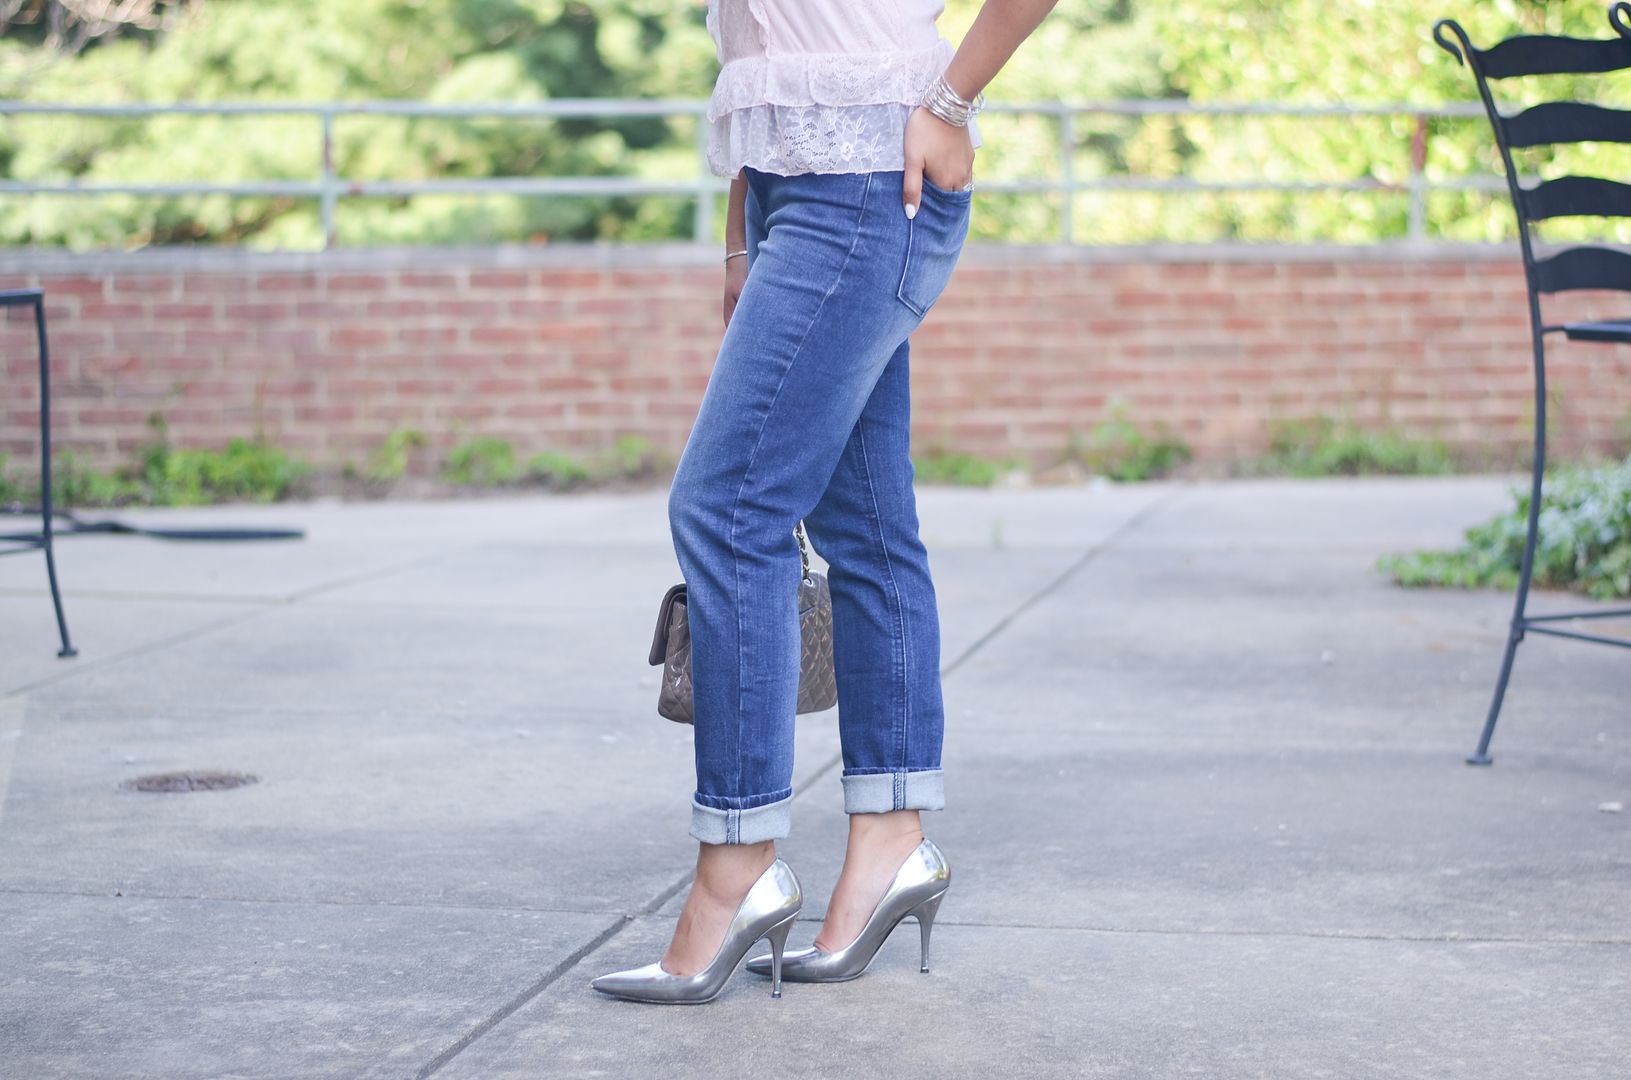 Mott & Bow SLIM BOYFRIEND - LAIGHT jeans